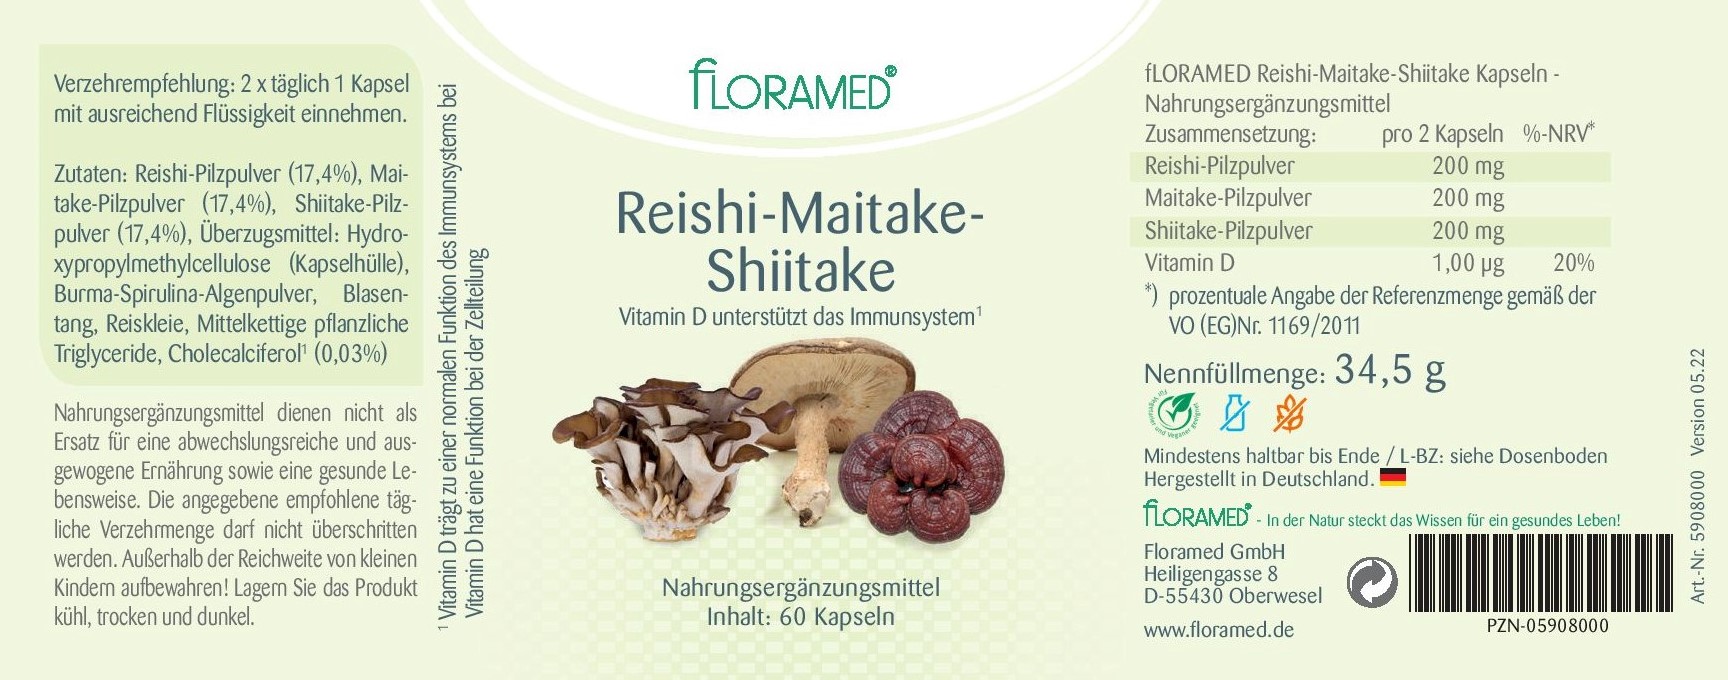 Floramed Reishi-Maitake-Shiitake